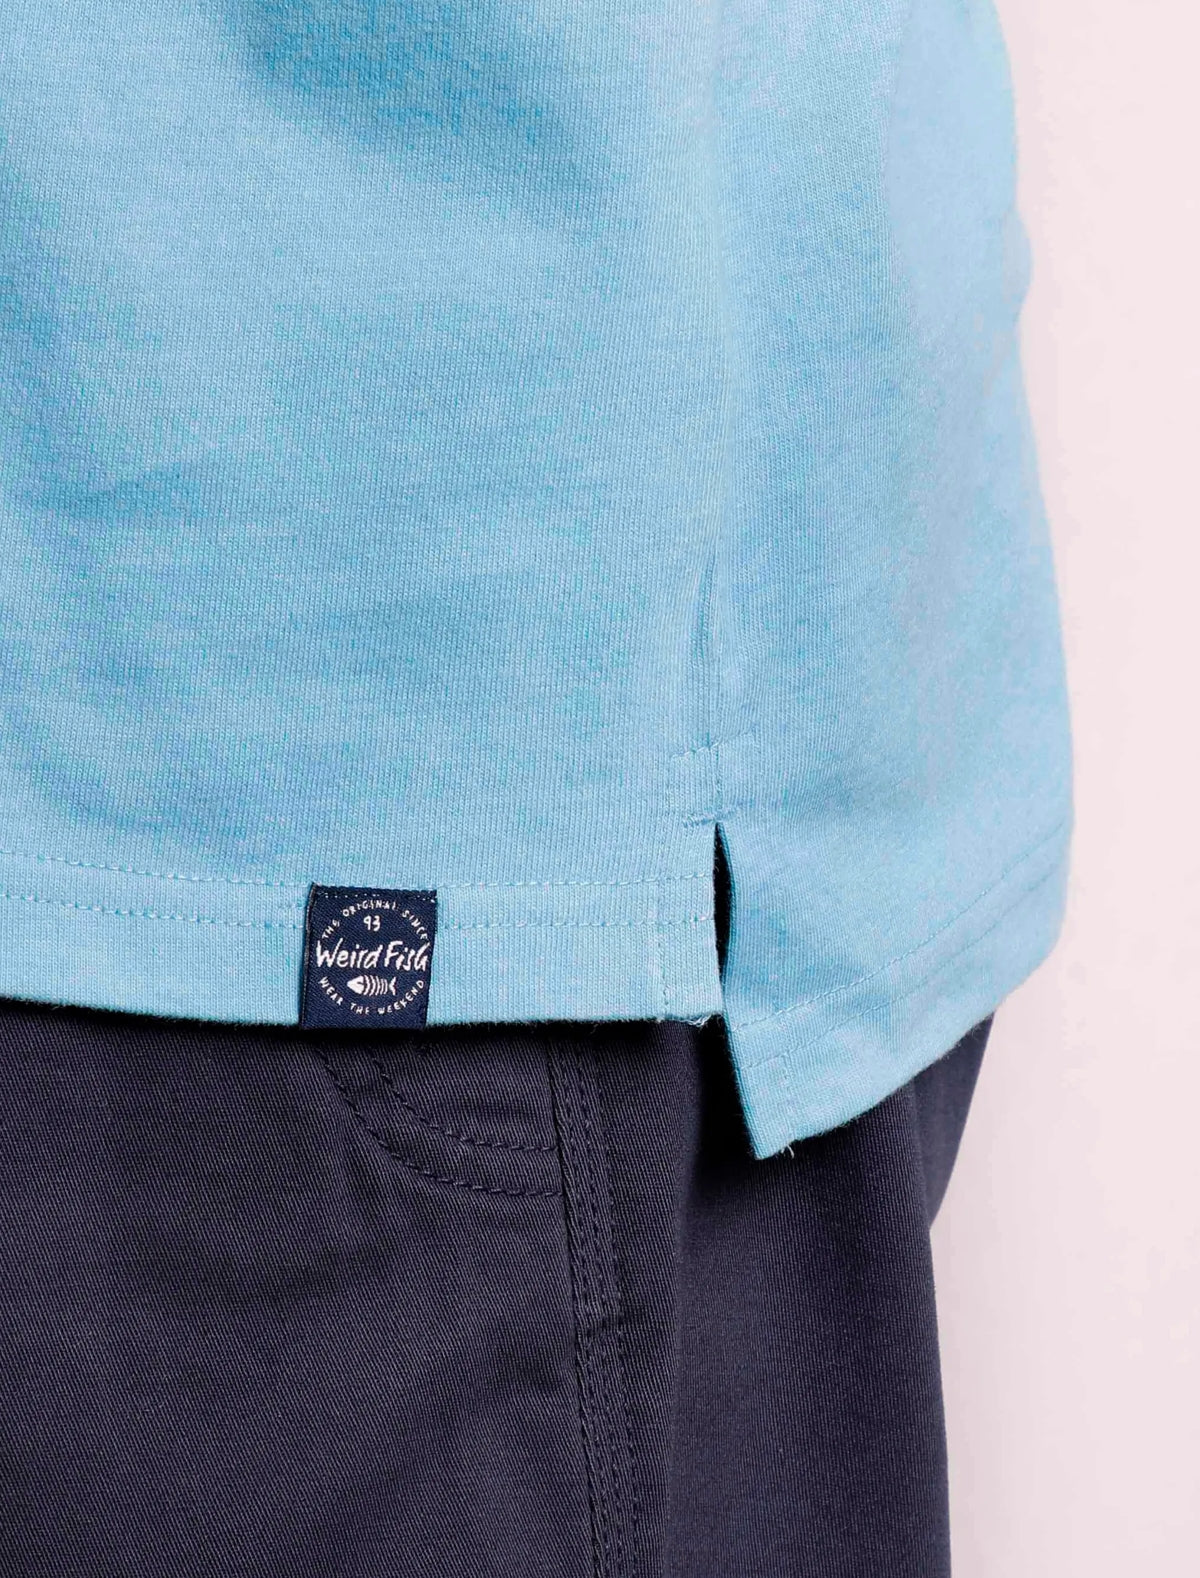 Sky Blue coloured men's Jetstream polo shirt from Weird Fish with hem logo label.